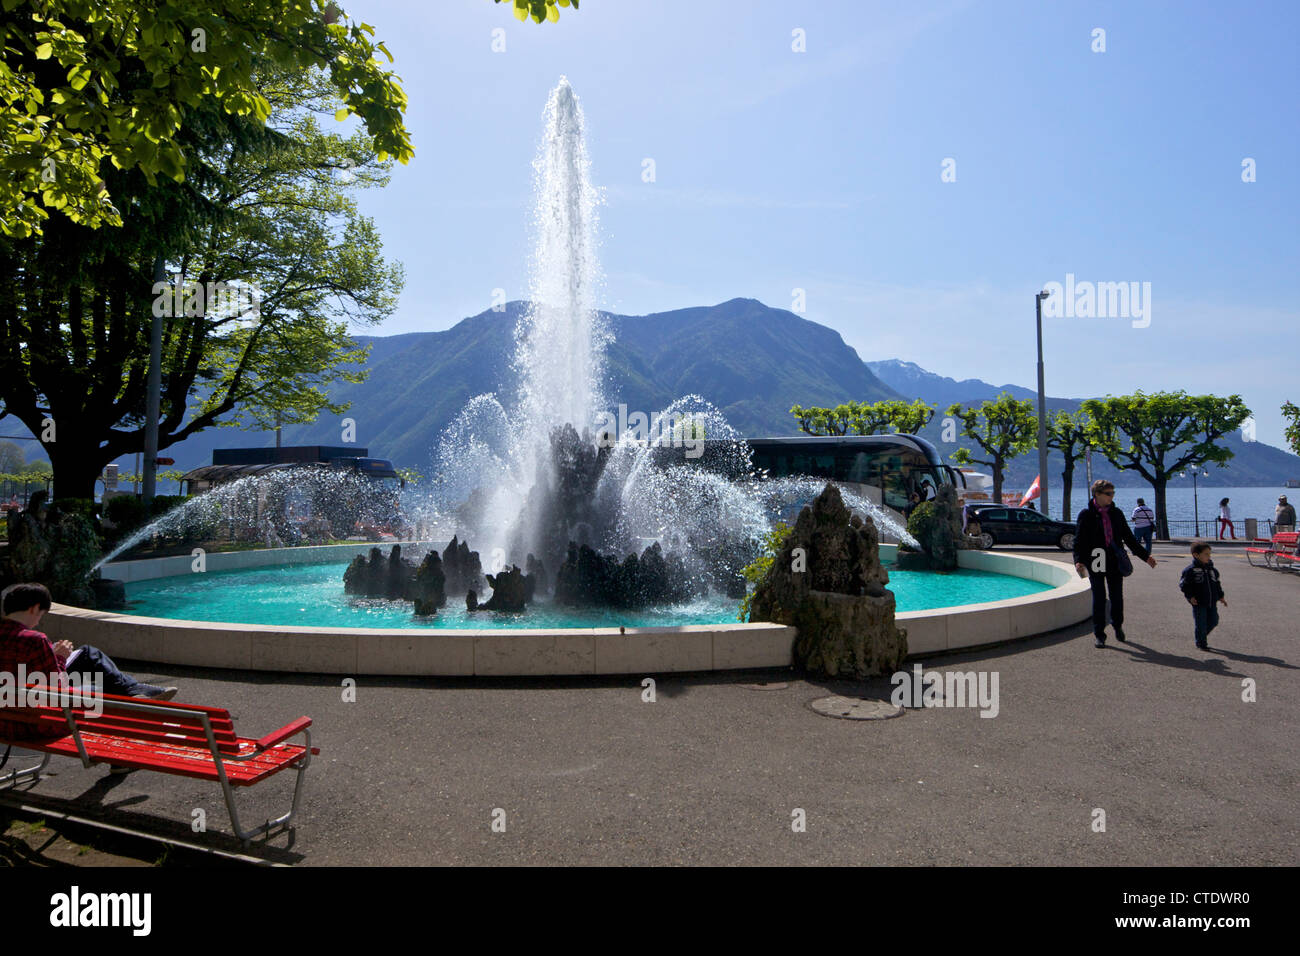 Fountain at Piazza Manzoni, city of Lugano, Lake Lugano, Ticino, Switzerland, Europe Stock Photo